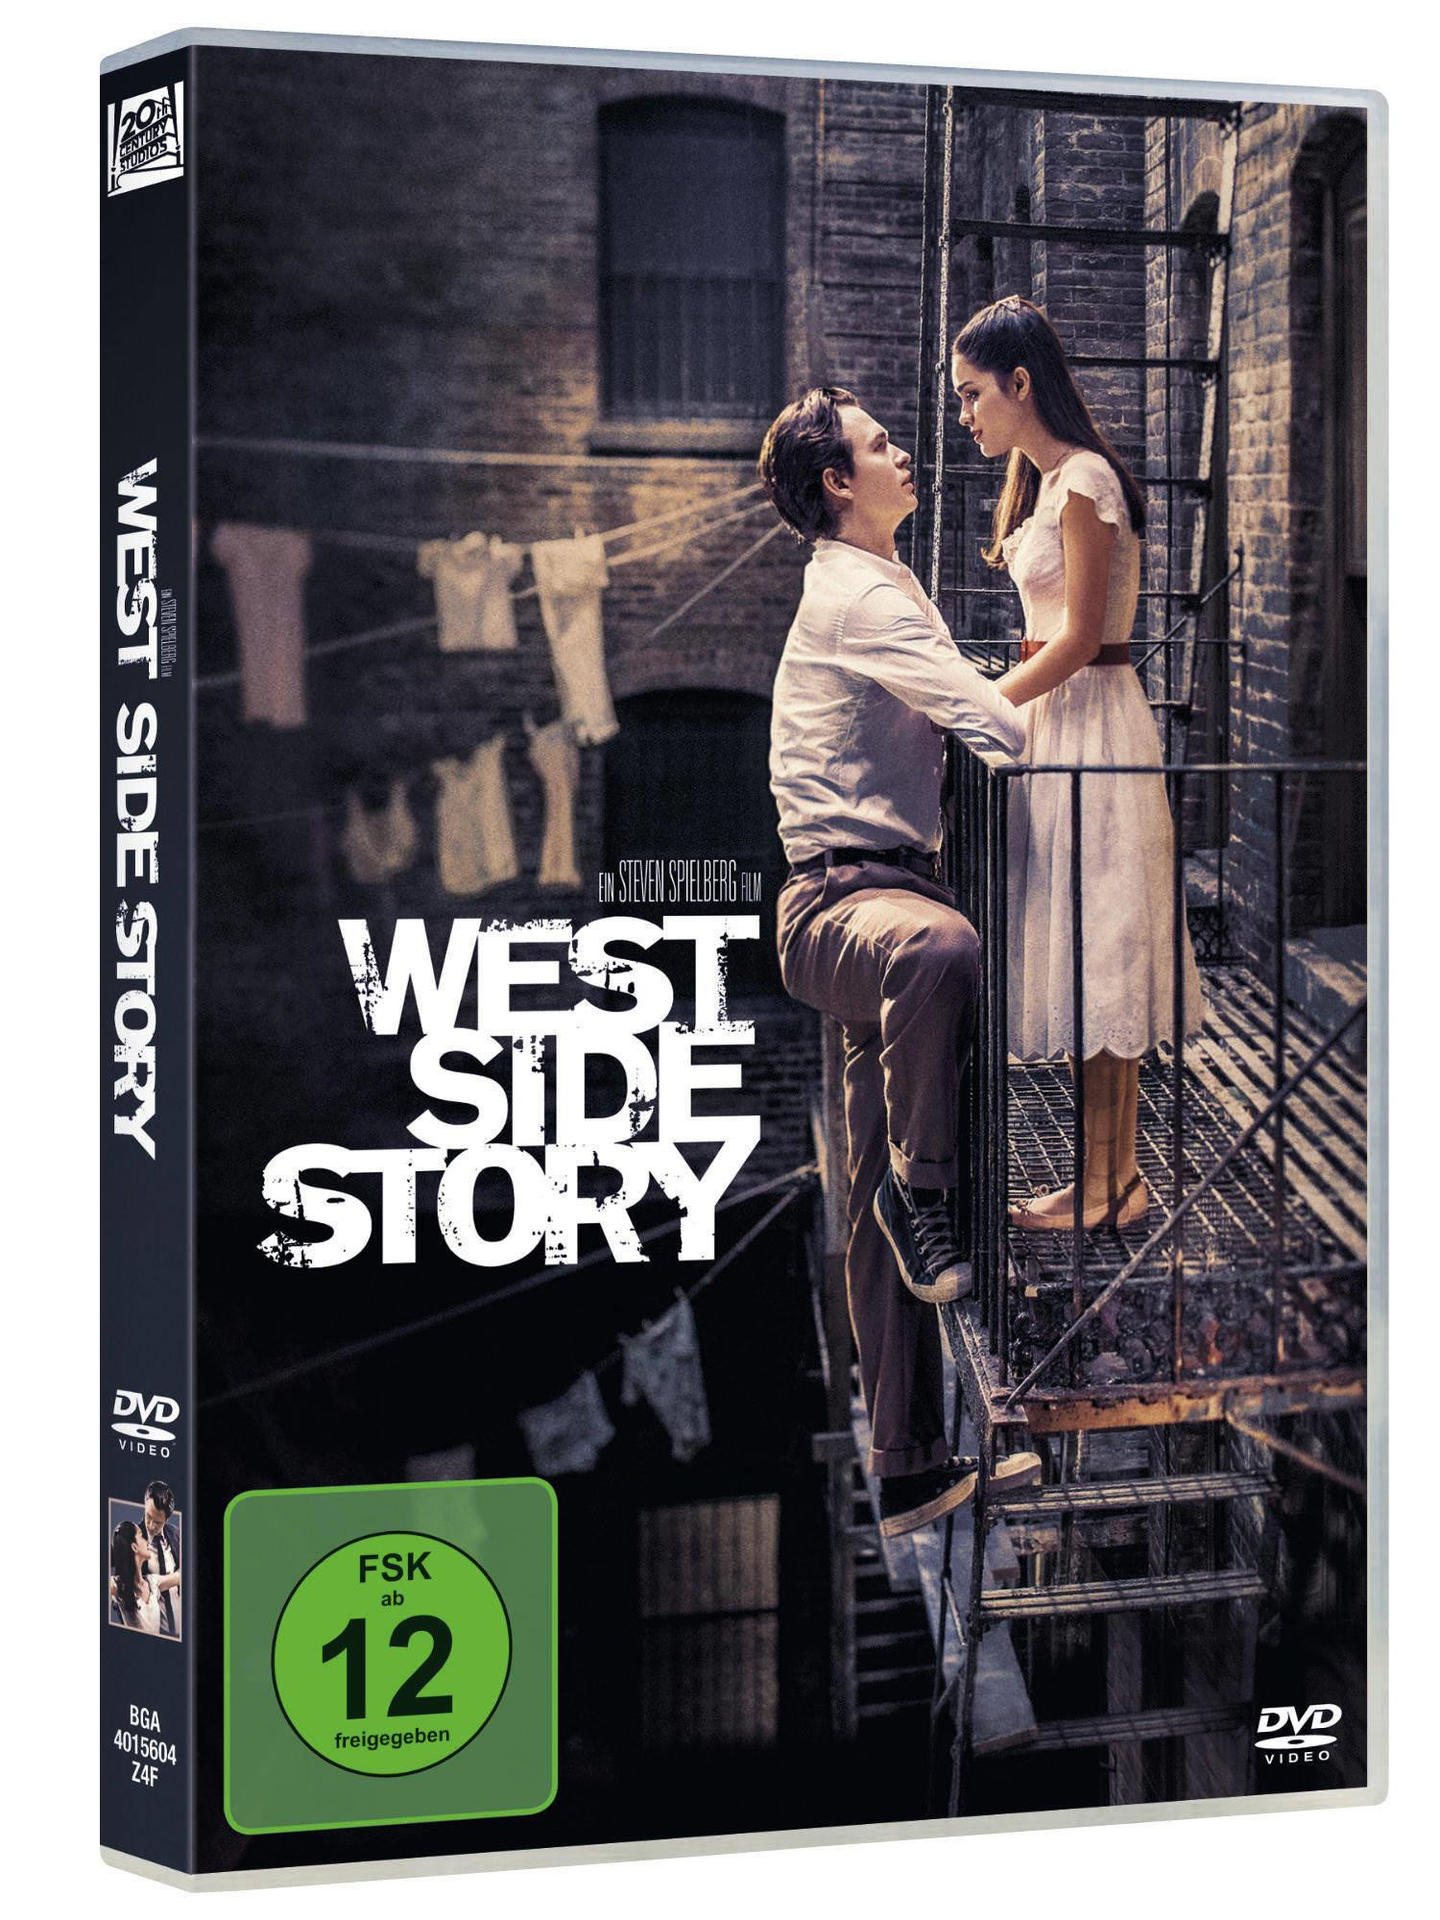 Story Side DVD West